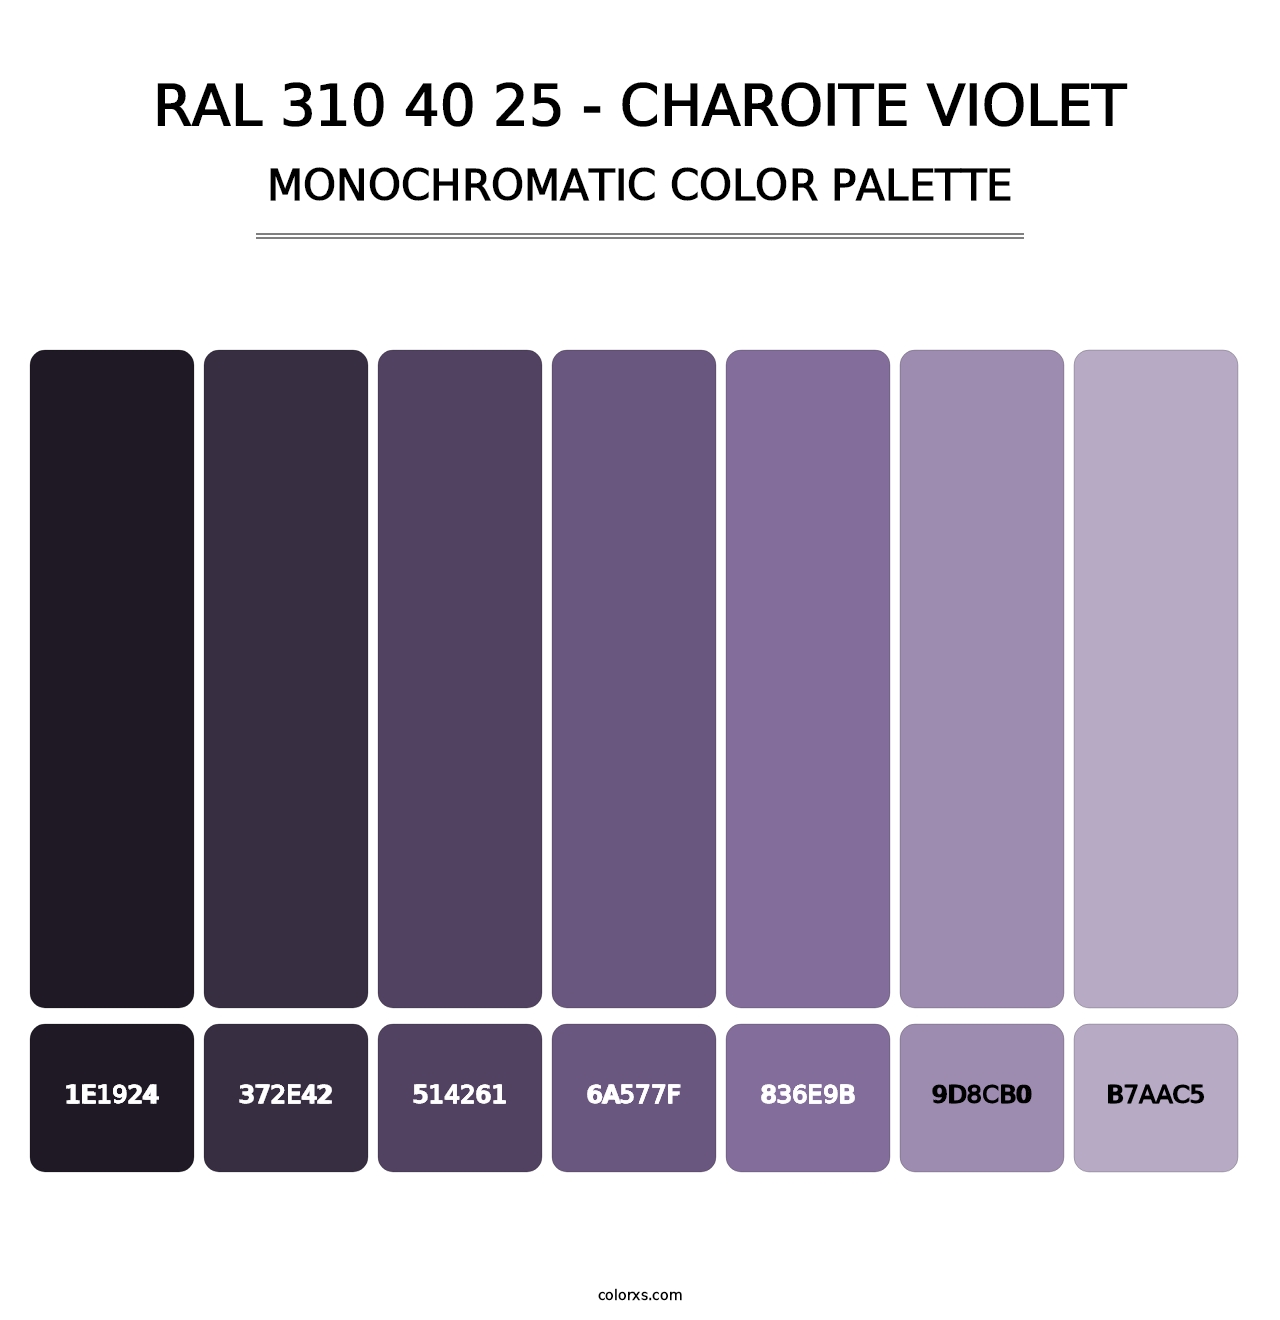 RAL 310 40 25 - Charoite Violet - Monochromatic Color Palette